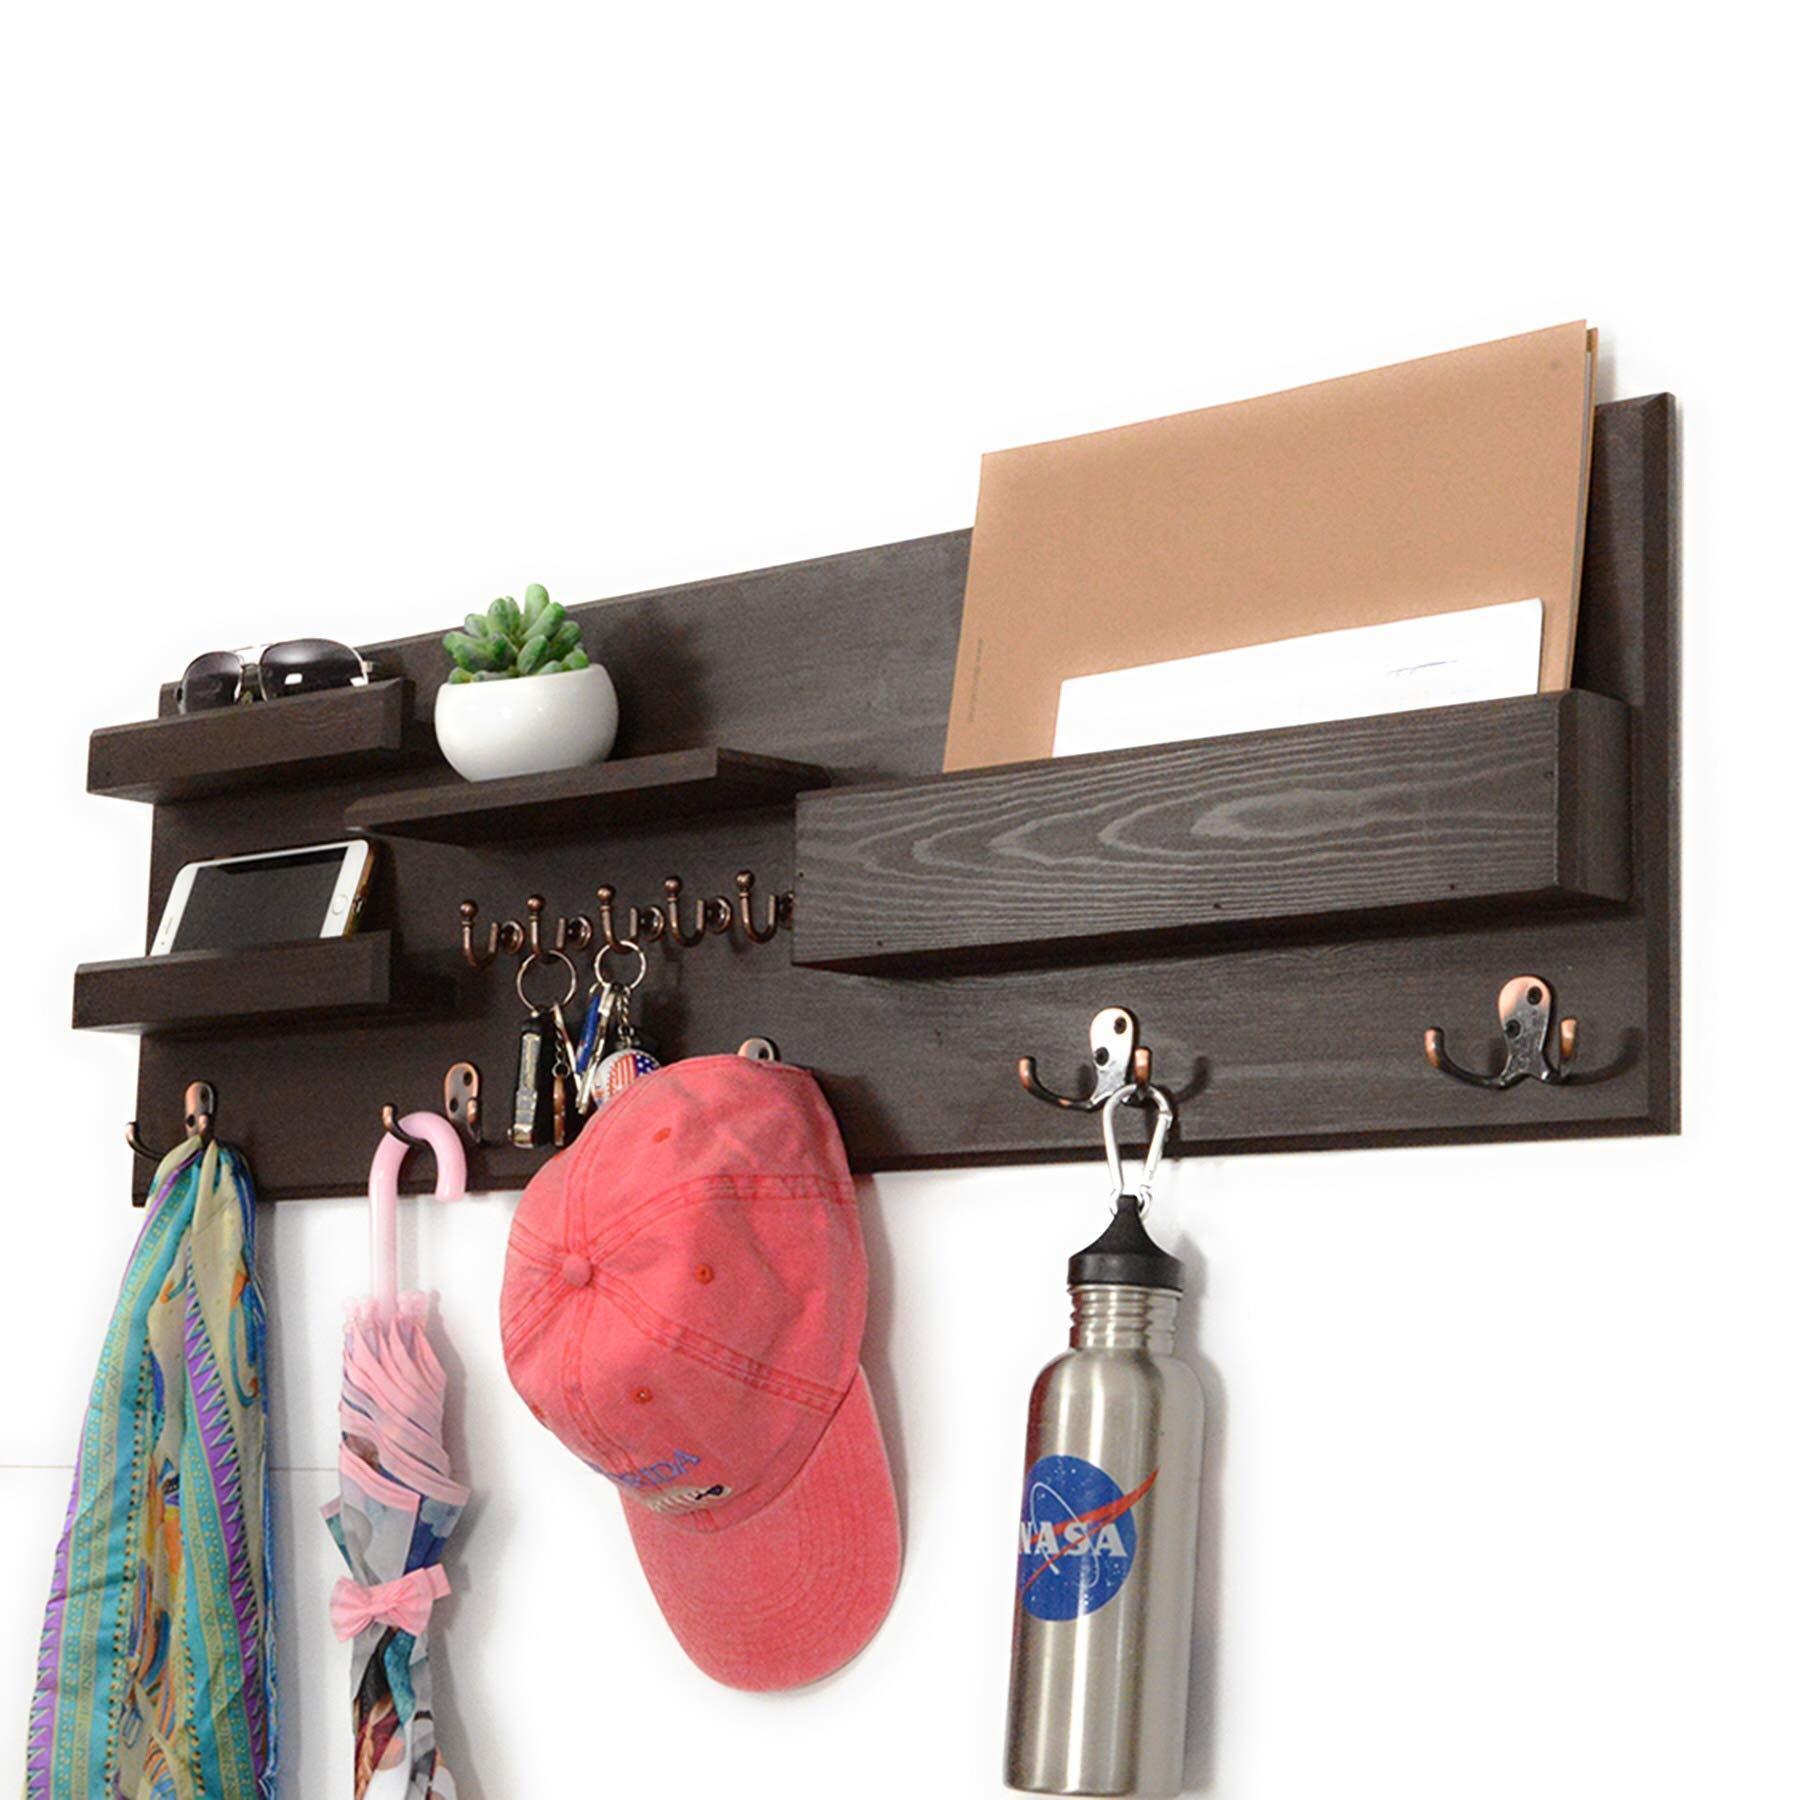 Woodymood Professional Wall Organizer Shelf, Key Hooks, Coat Hooks, Mail Pocket, Ledges W:37'' L:3.7'' H:12'' (Dark Brown)